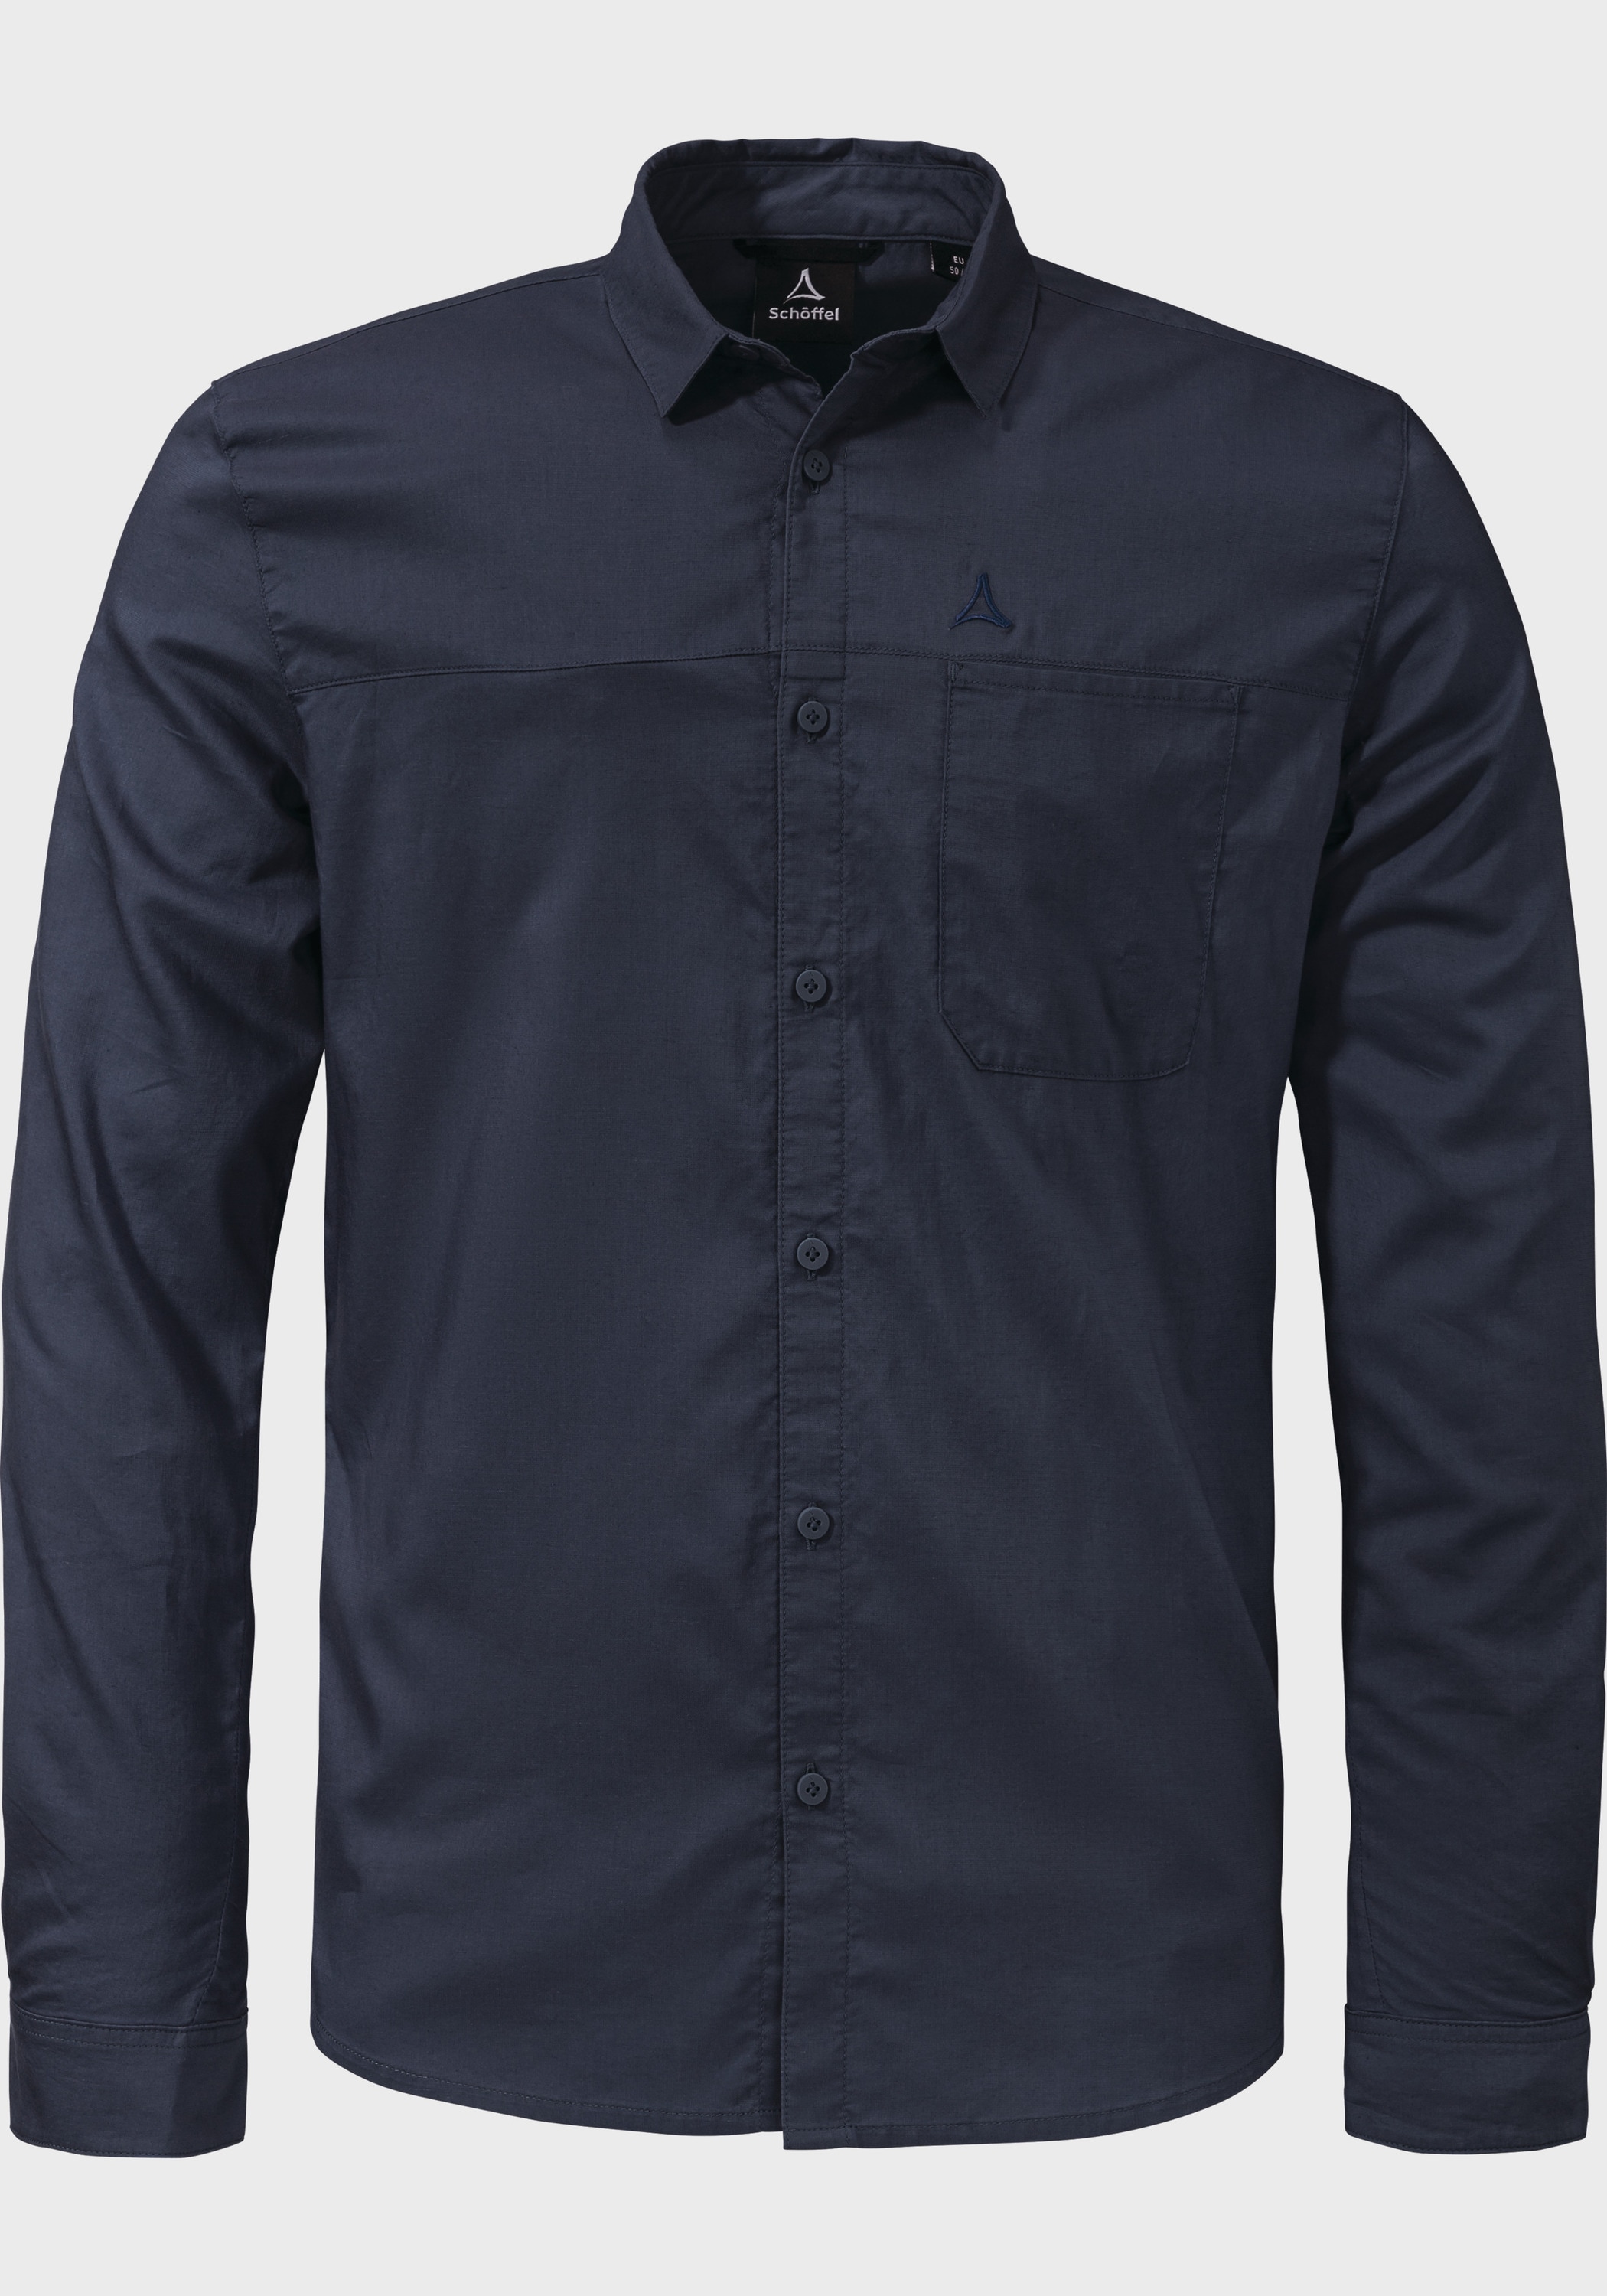 Outdoorhemd »Shirt Treviso M«